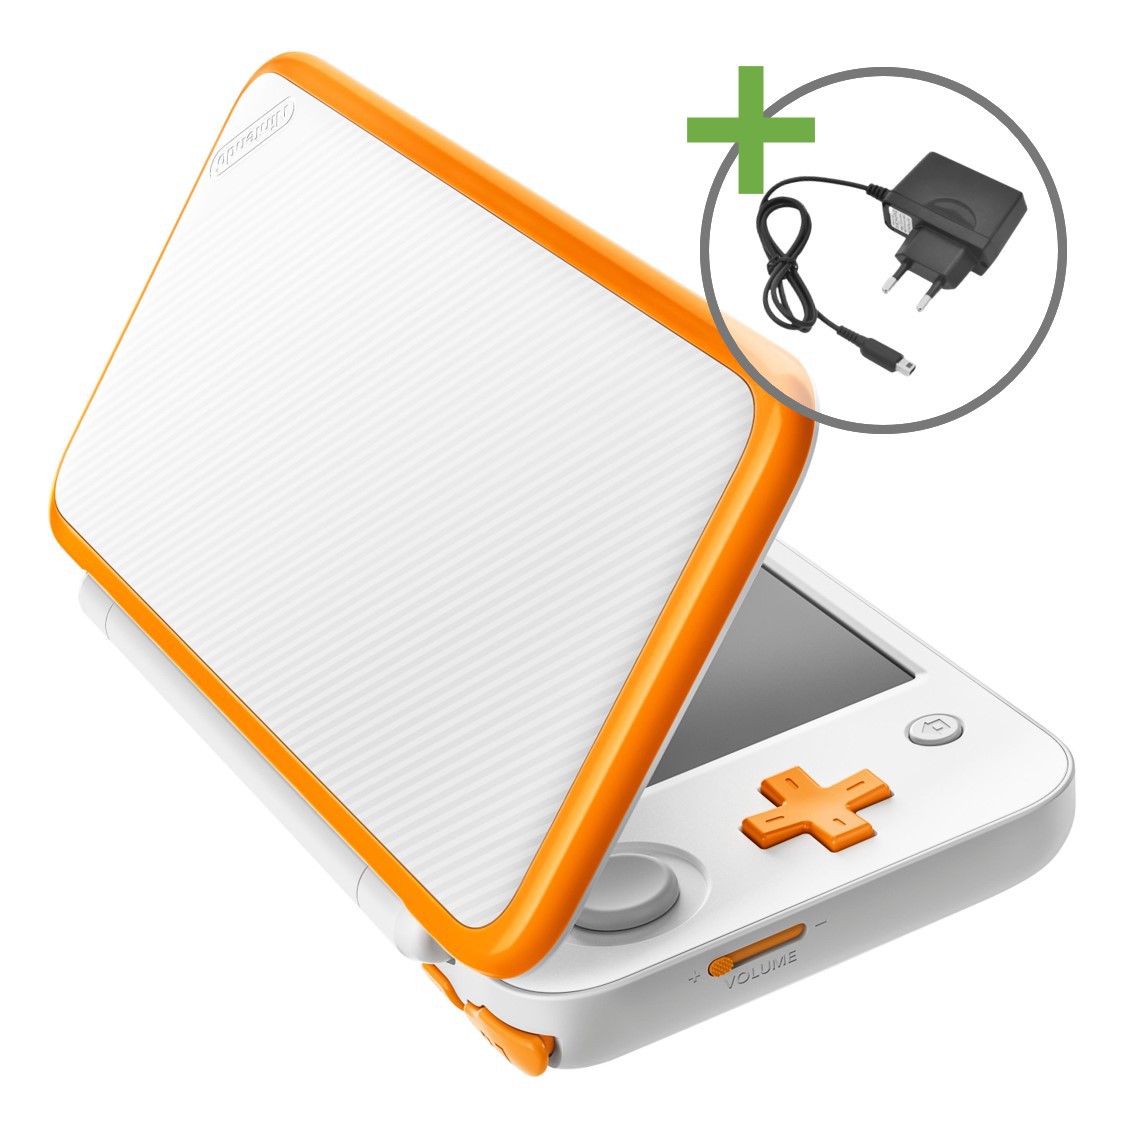 New Nintendo 2DS XL - White/Orange - Nintendo 3DS Hardware - 2